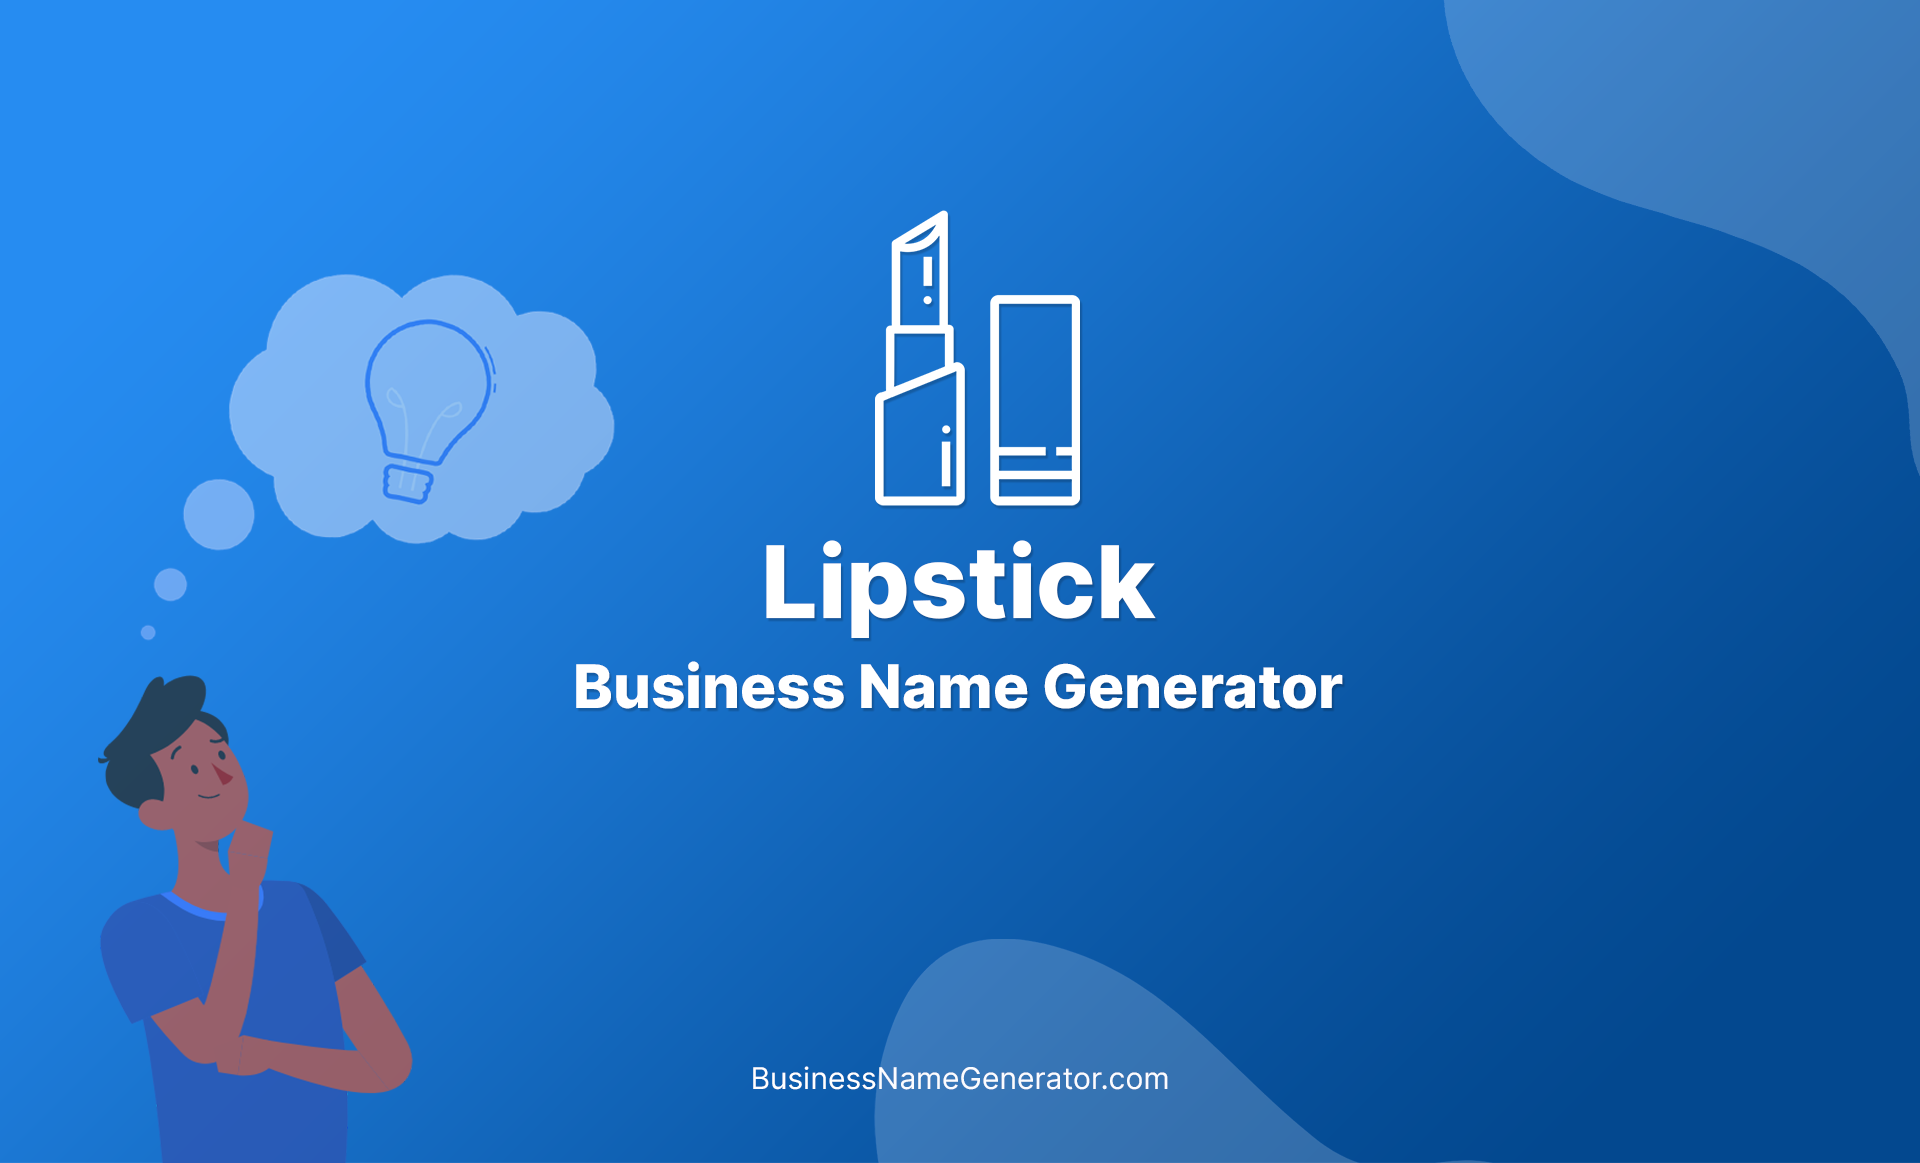 Lipstick Business Name Generator